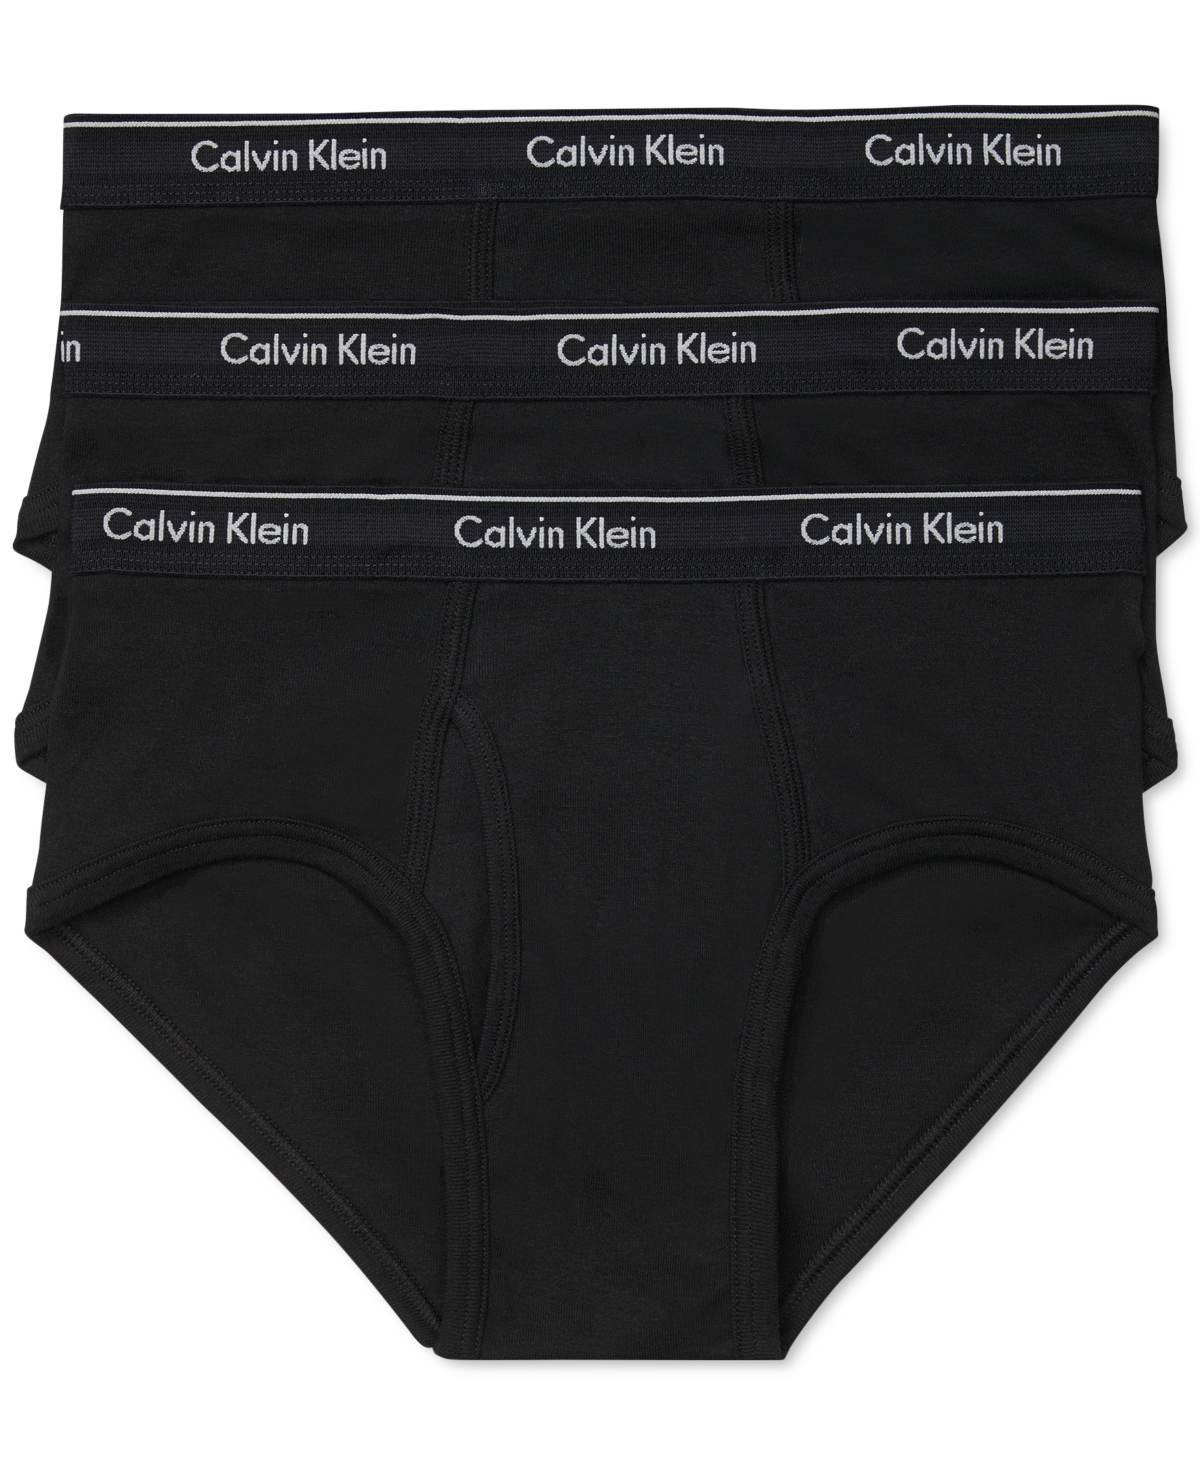 Calvin Klein Men's Cotton Classics Briefs, 3-Pack